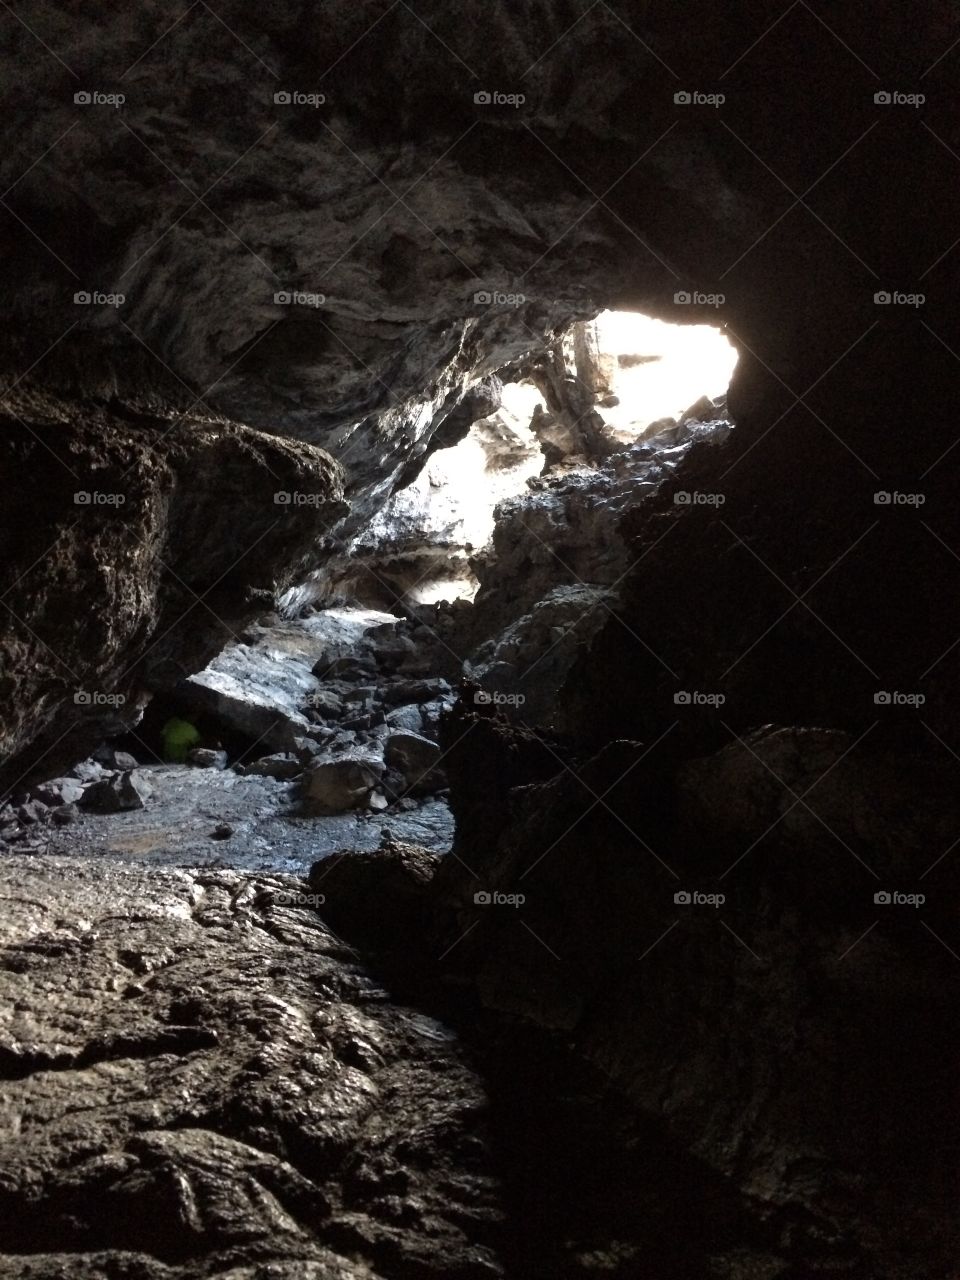 Volcano tube, cave